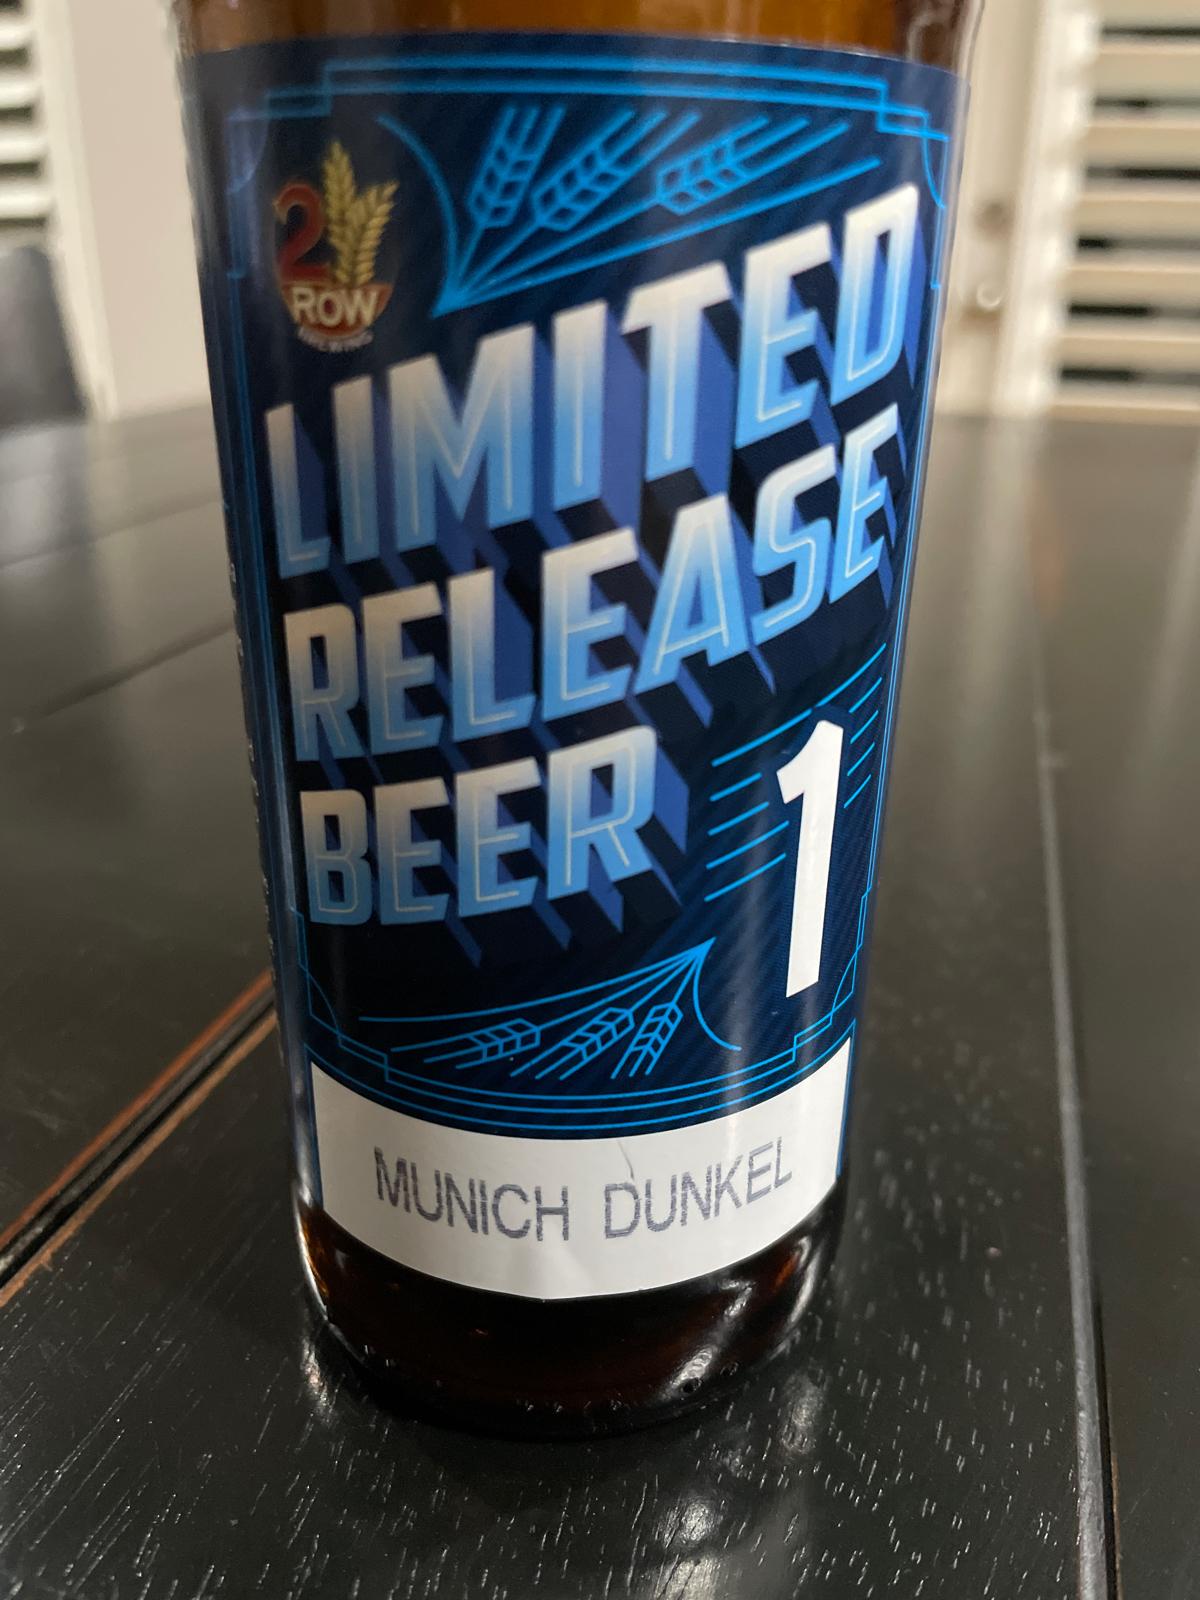 Limited Release Beer 1: Munich Dunkel